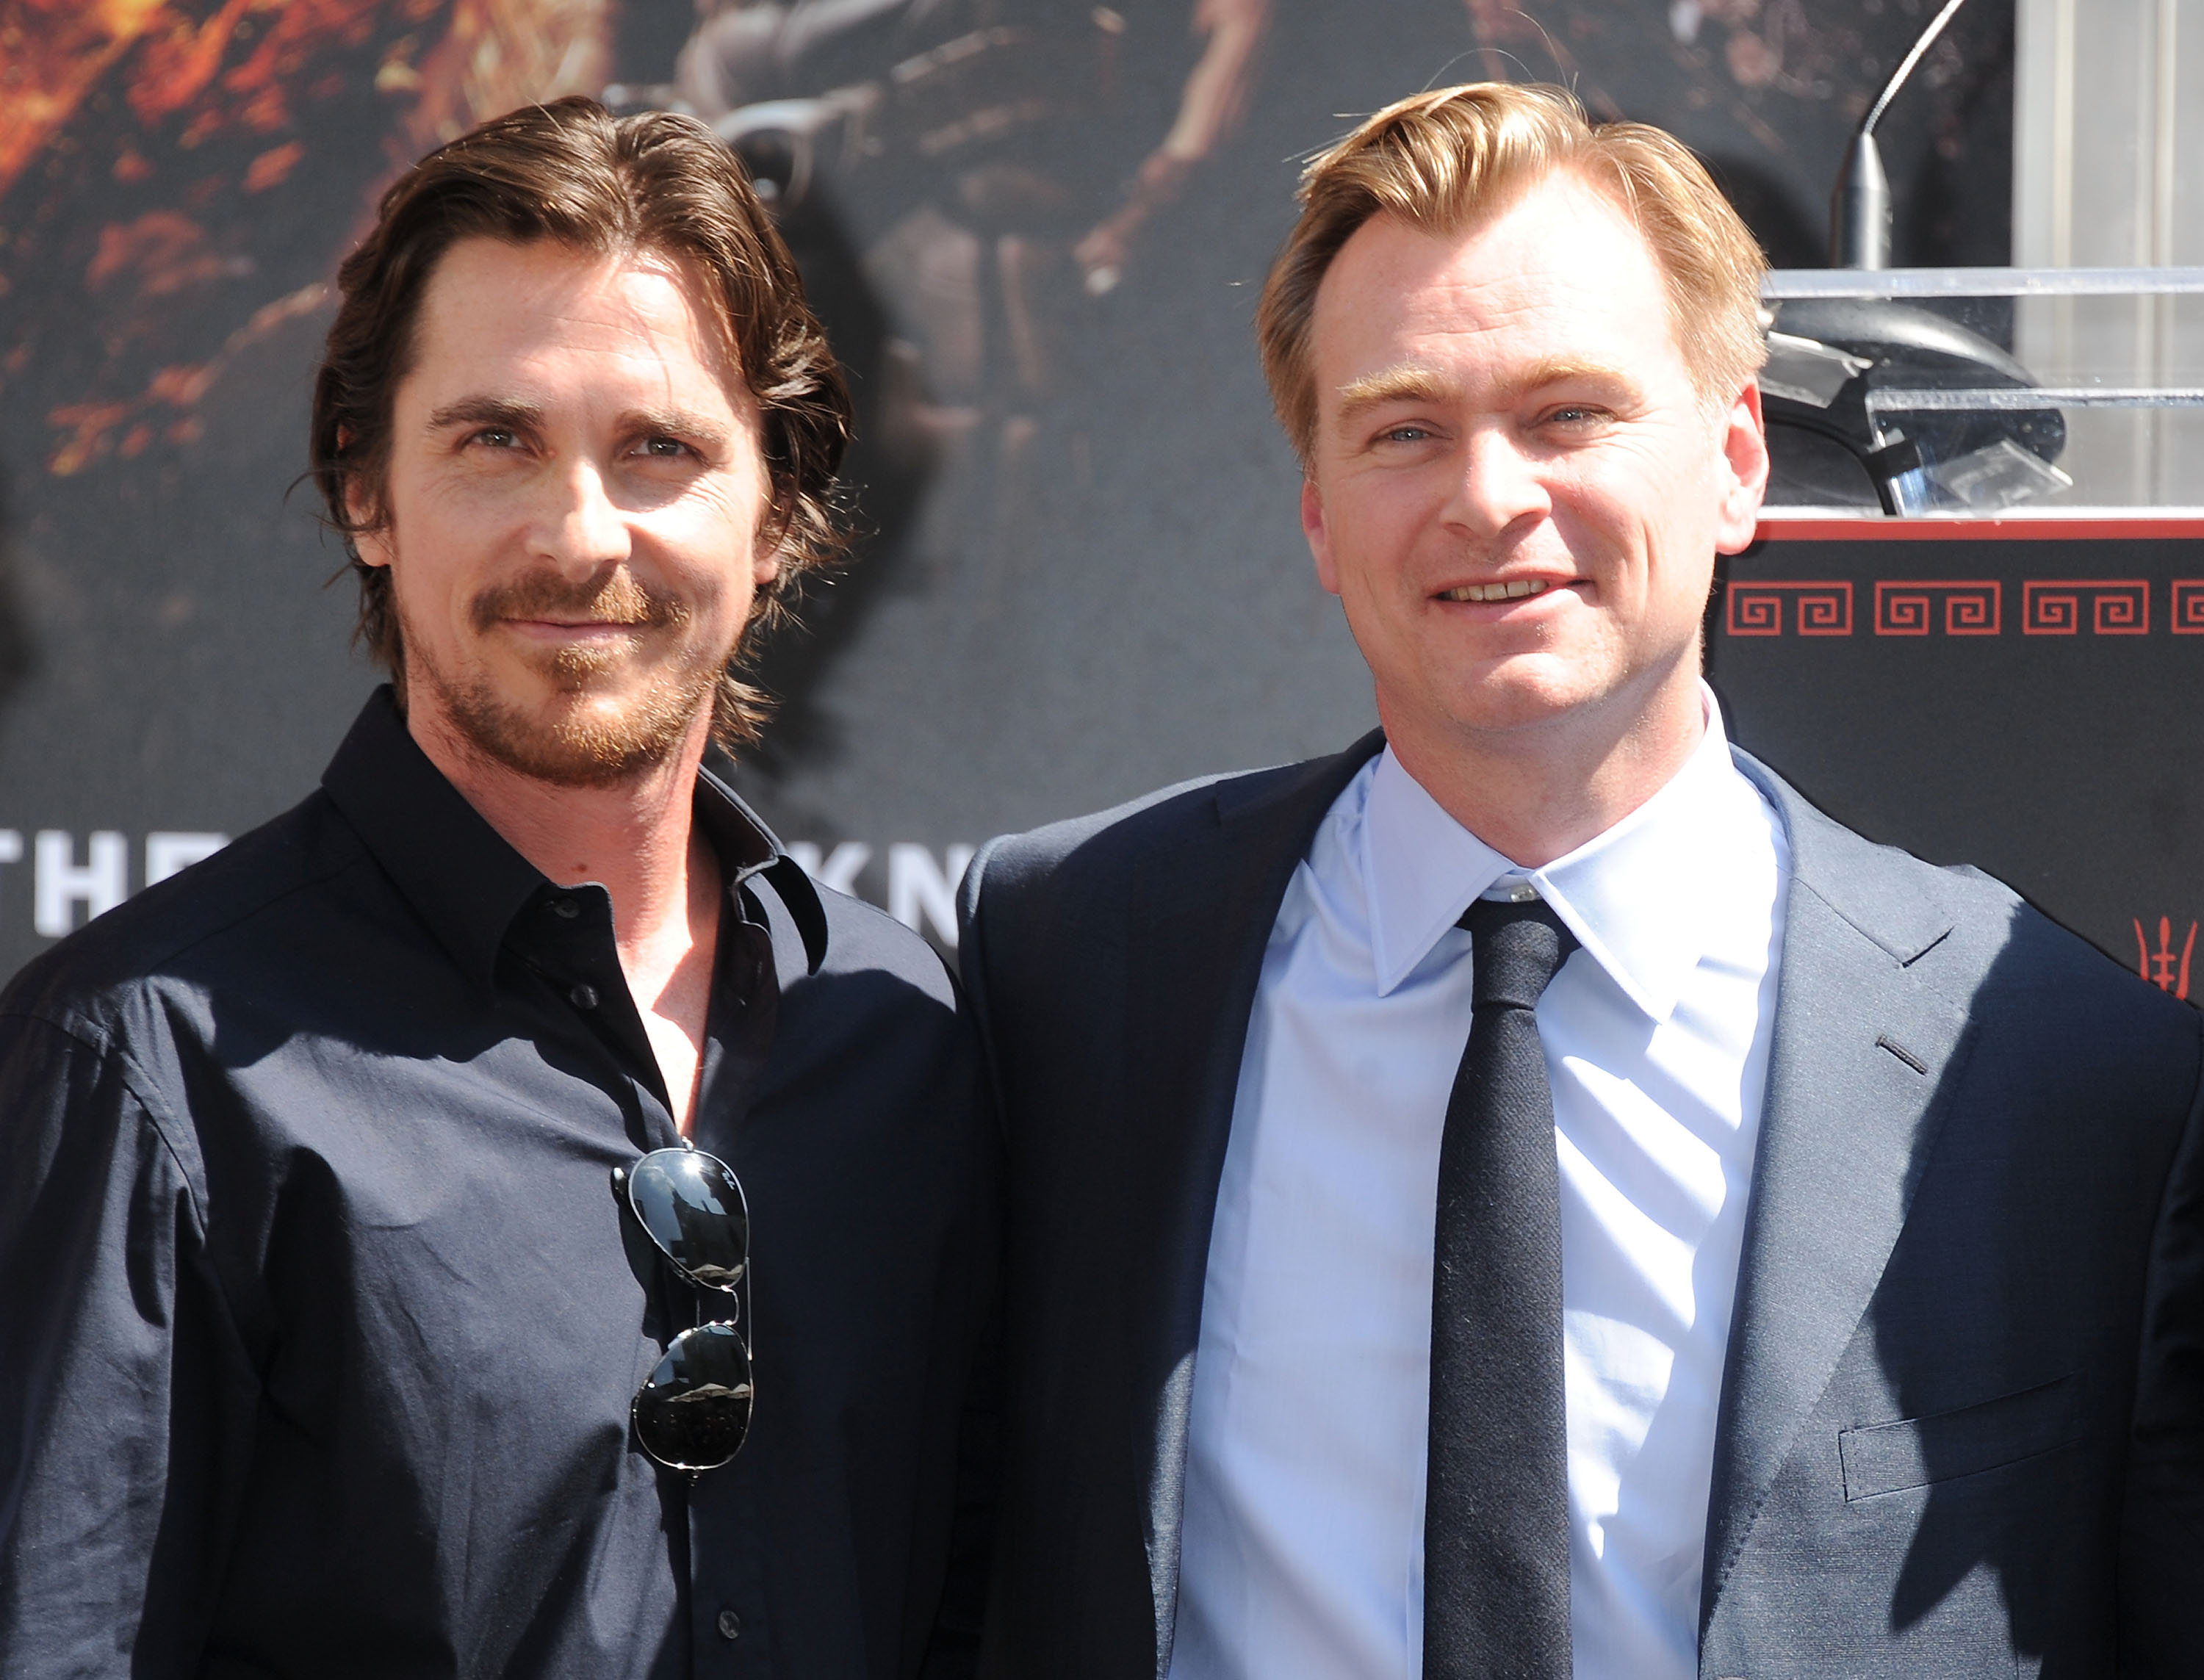 Christian Bale open to Batman again with Christopher Nolan